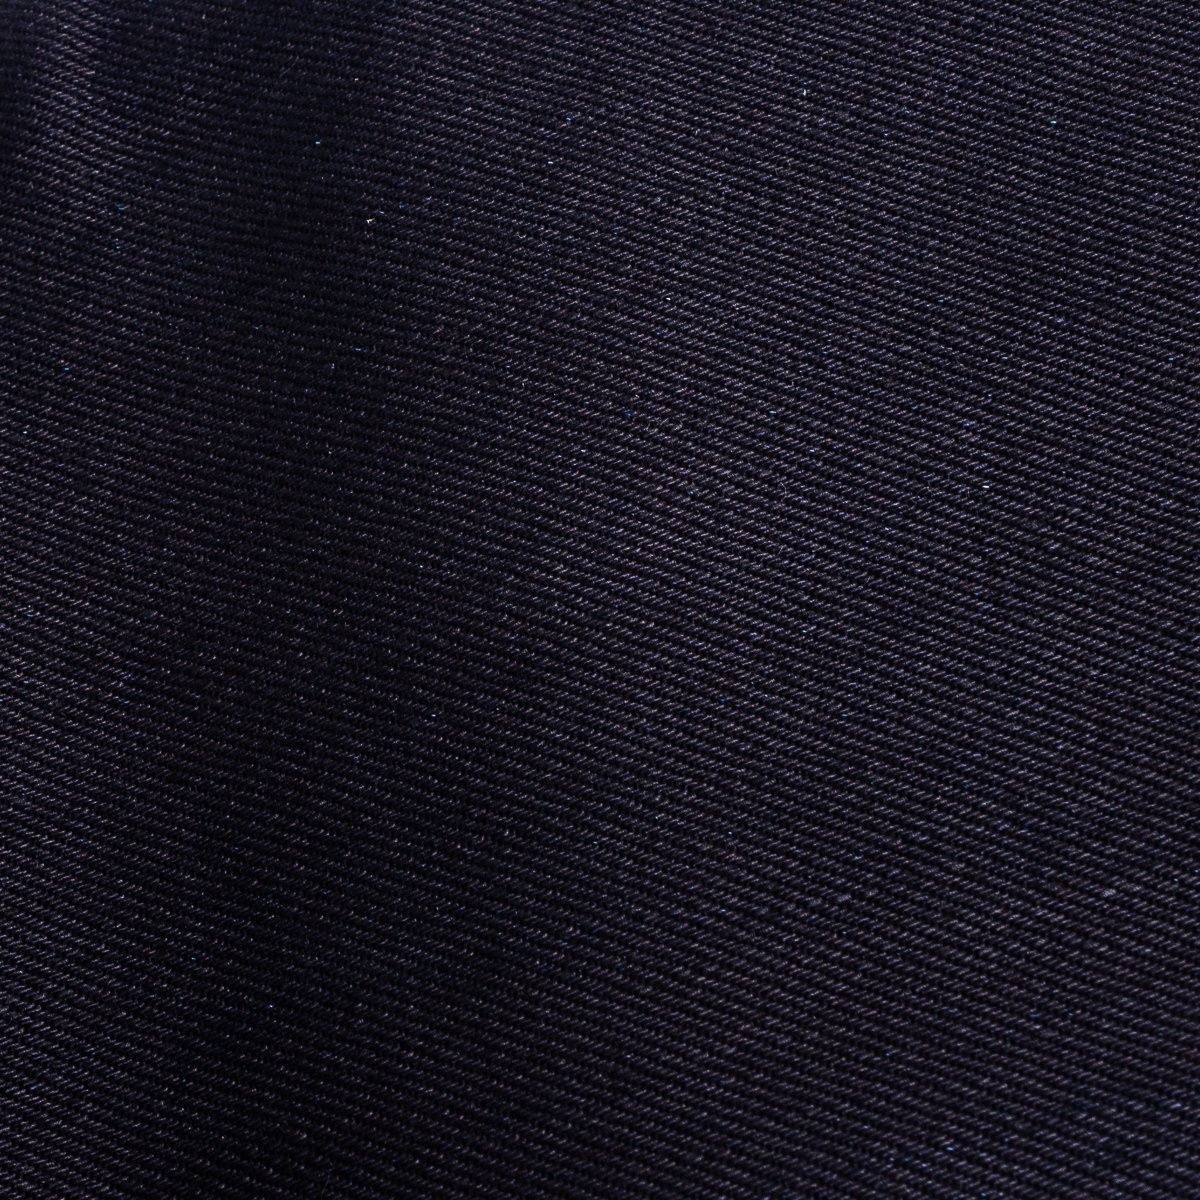 IH-888-XHSib 25oz Selvedge Denim Medium/High Rise Tapered Cut Jeans - Indigo/Black - 16